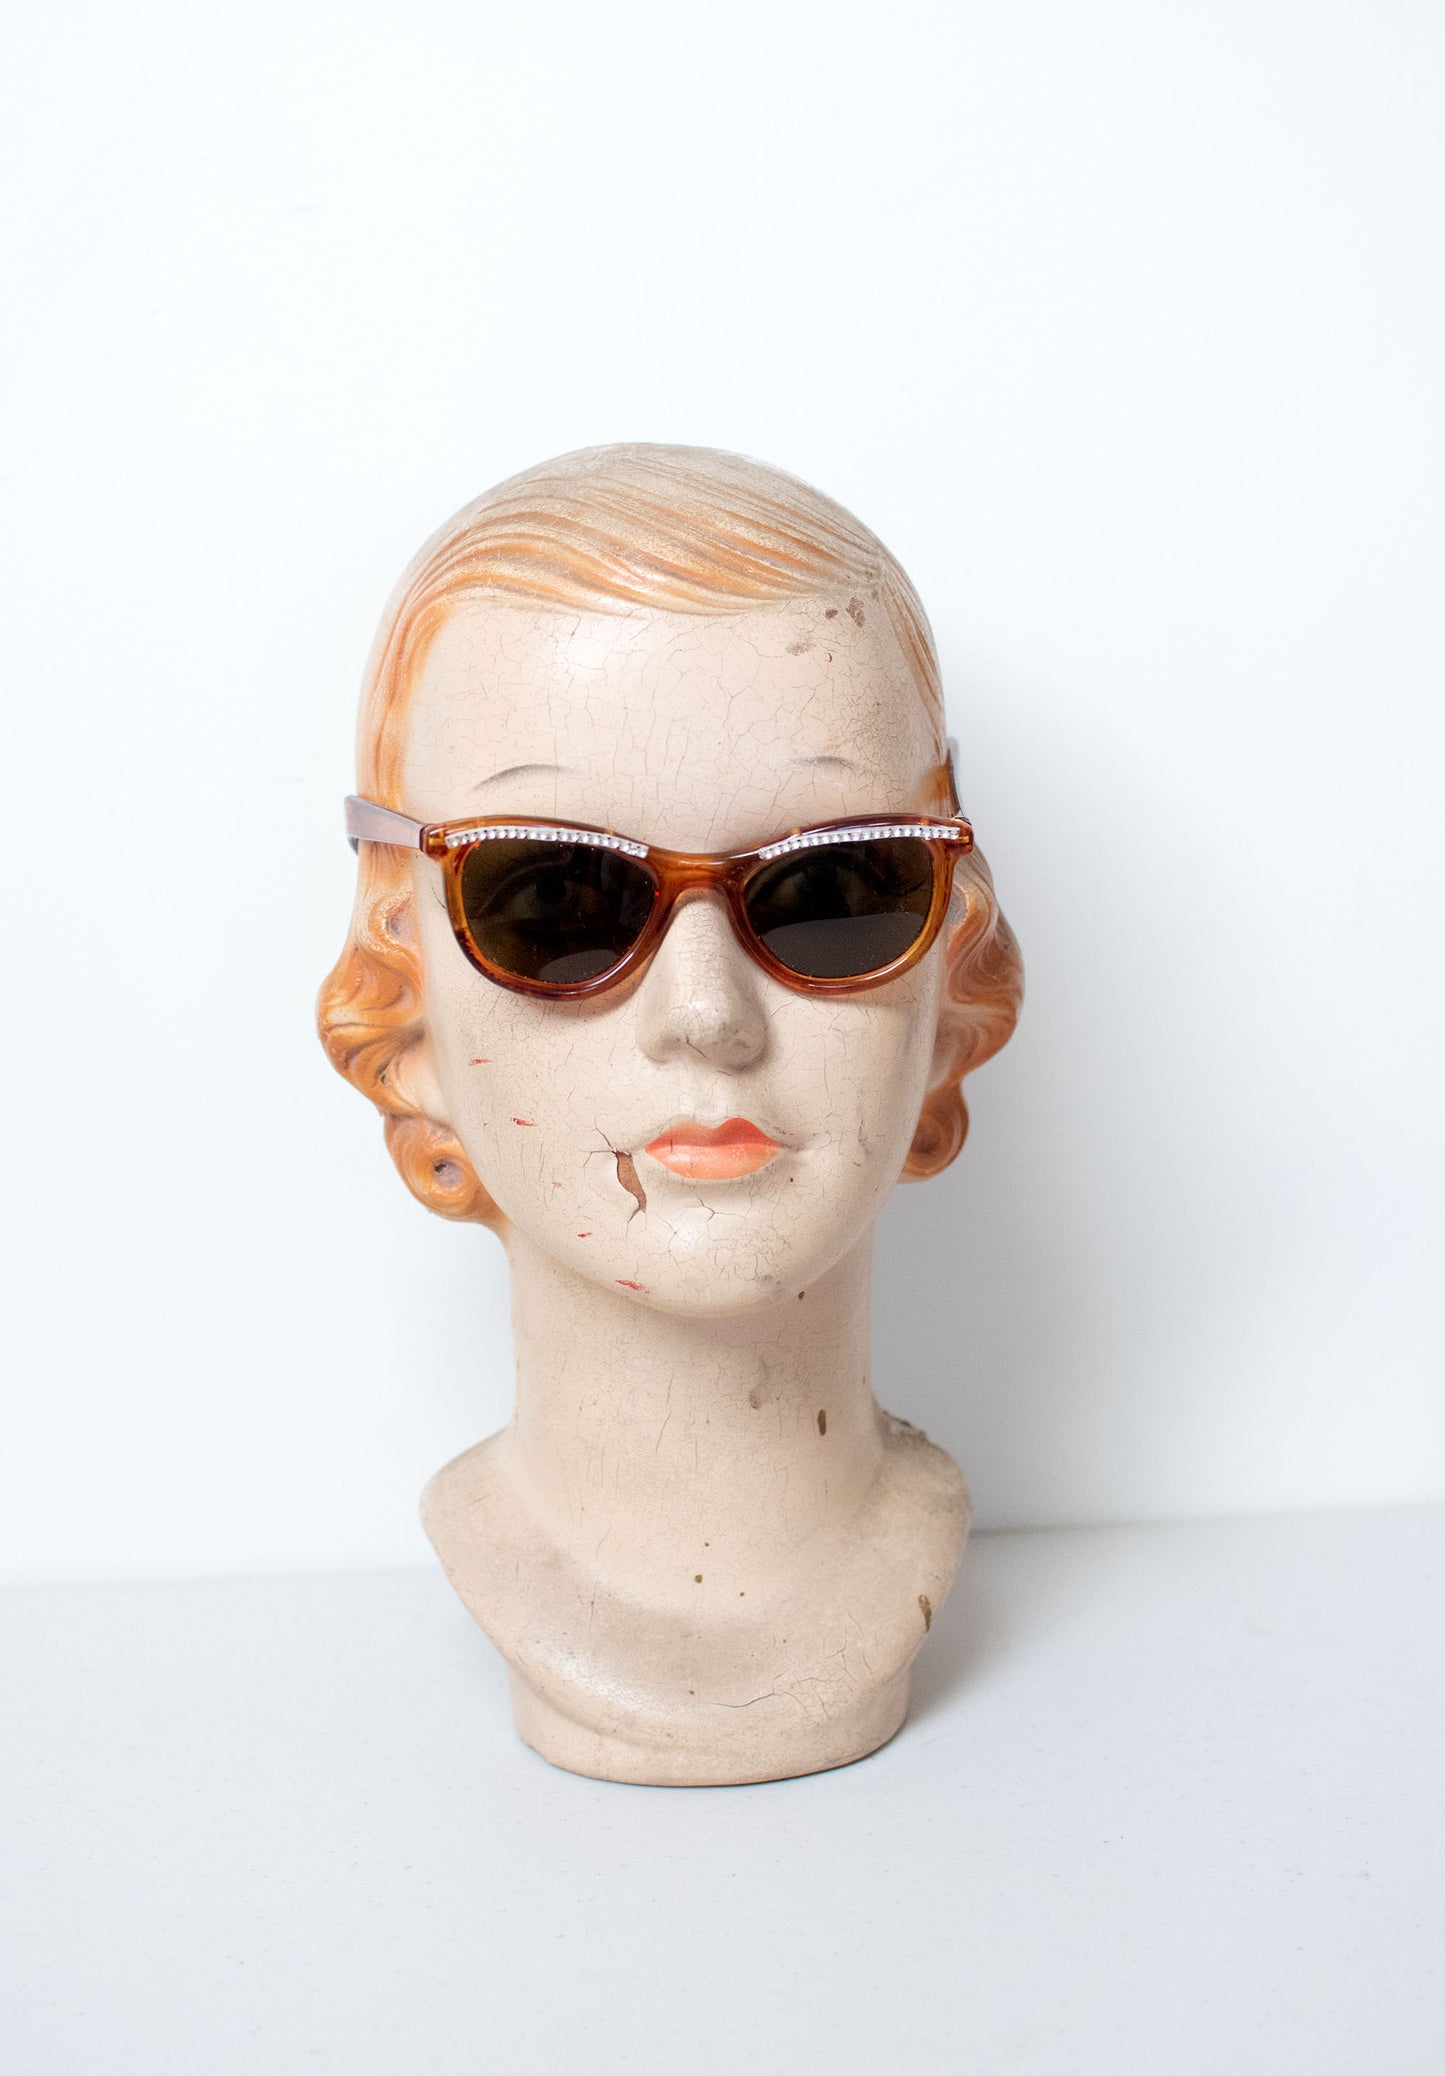 1950s Fosta Sunglasses | Amber